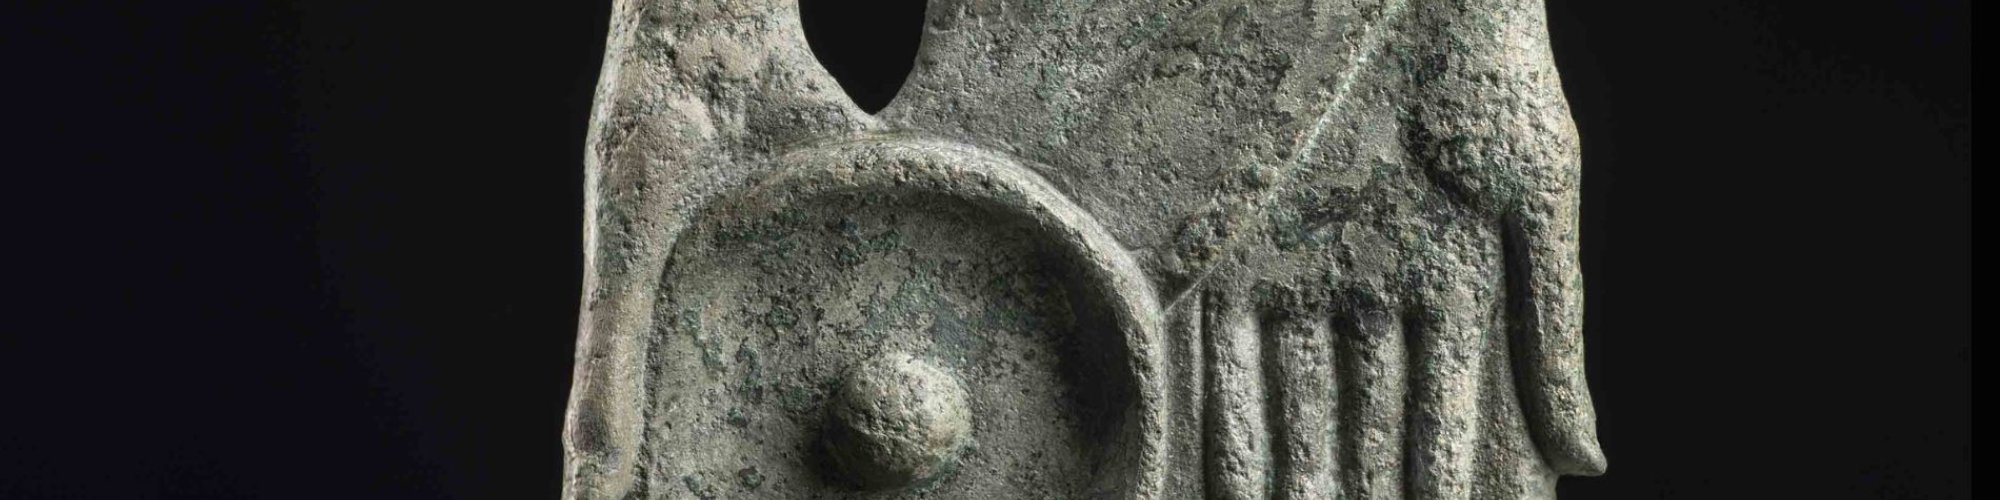 Detalle de la Ombra di San Gimignano